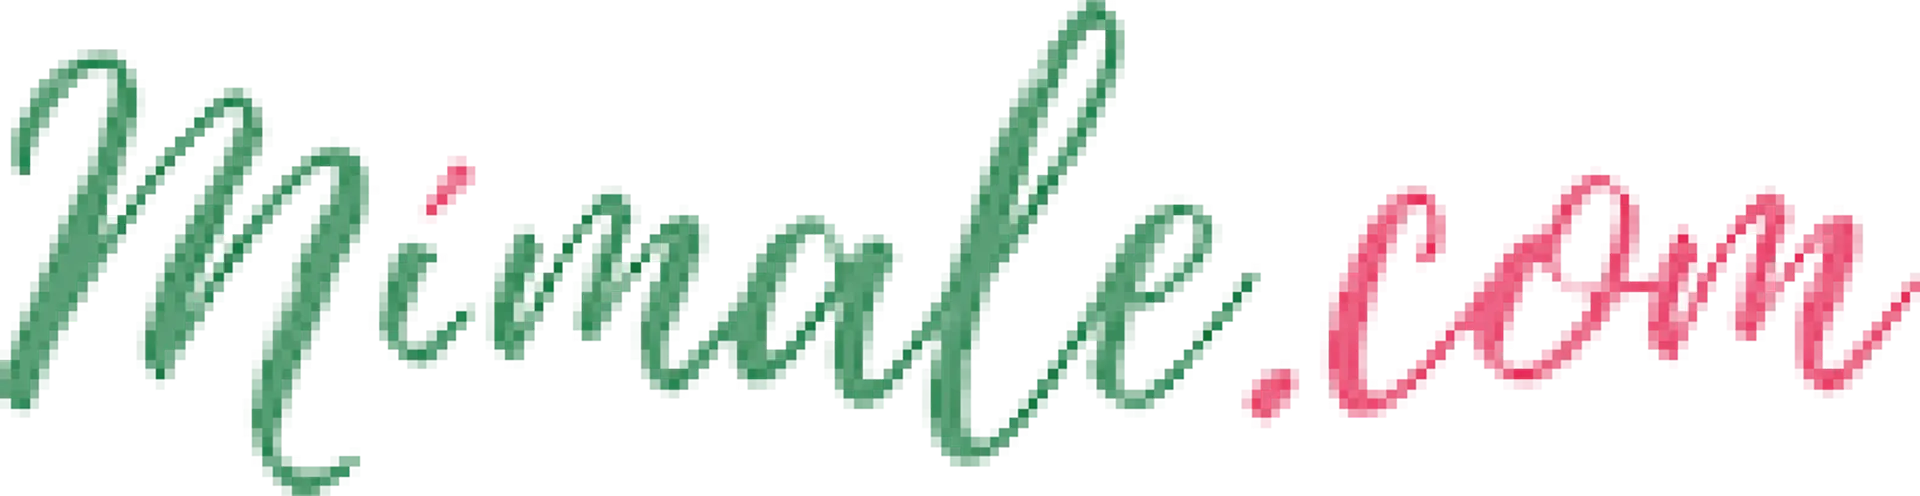 MIMALE logo